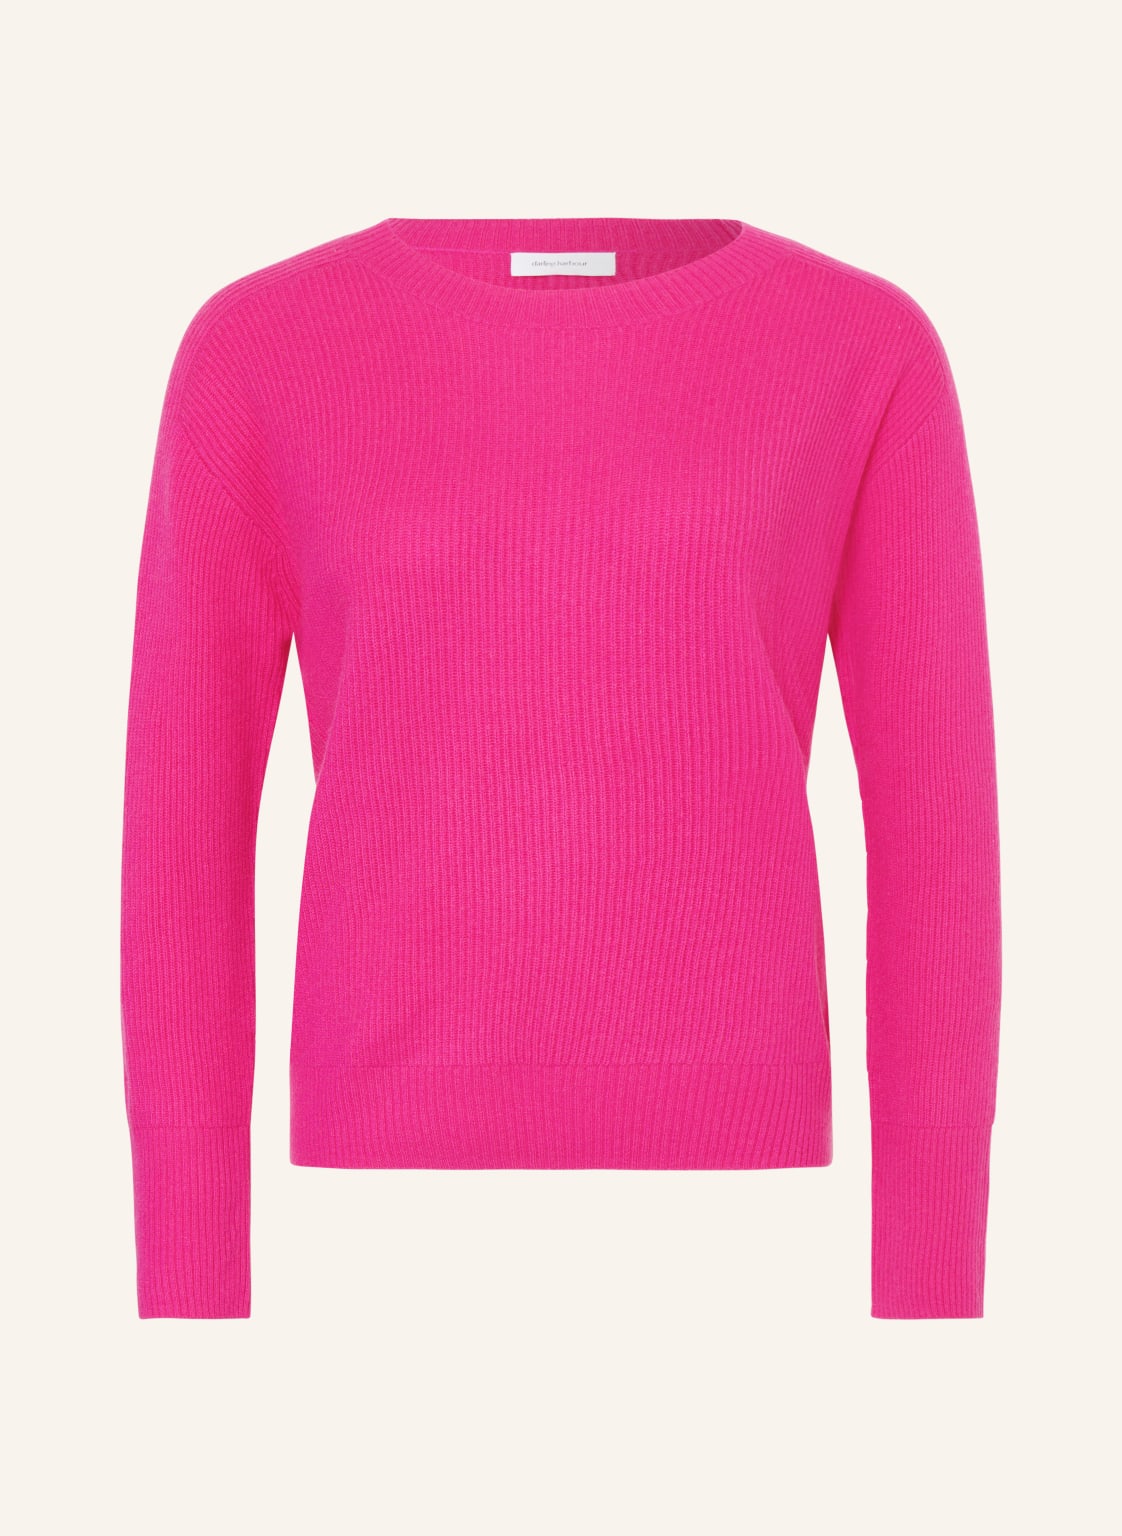 Darling Harbour Cashmere-Pullover pink von darling harbour